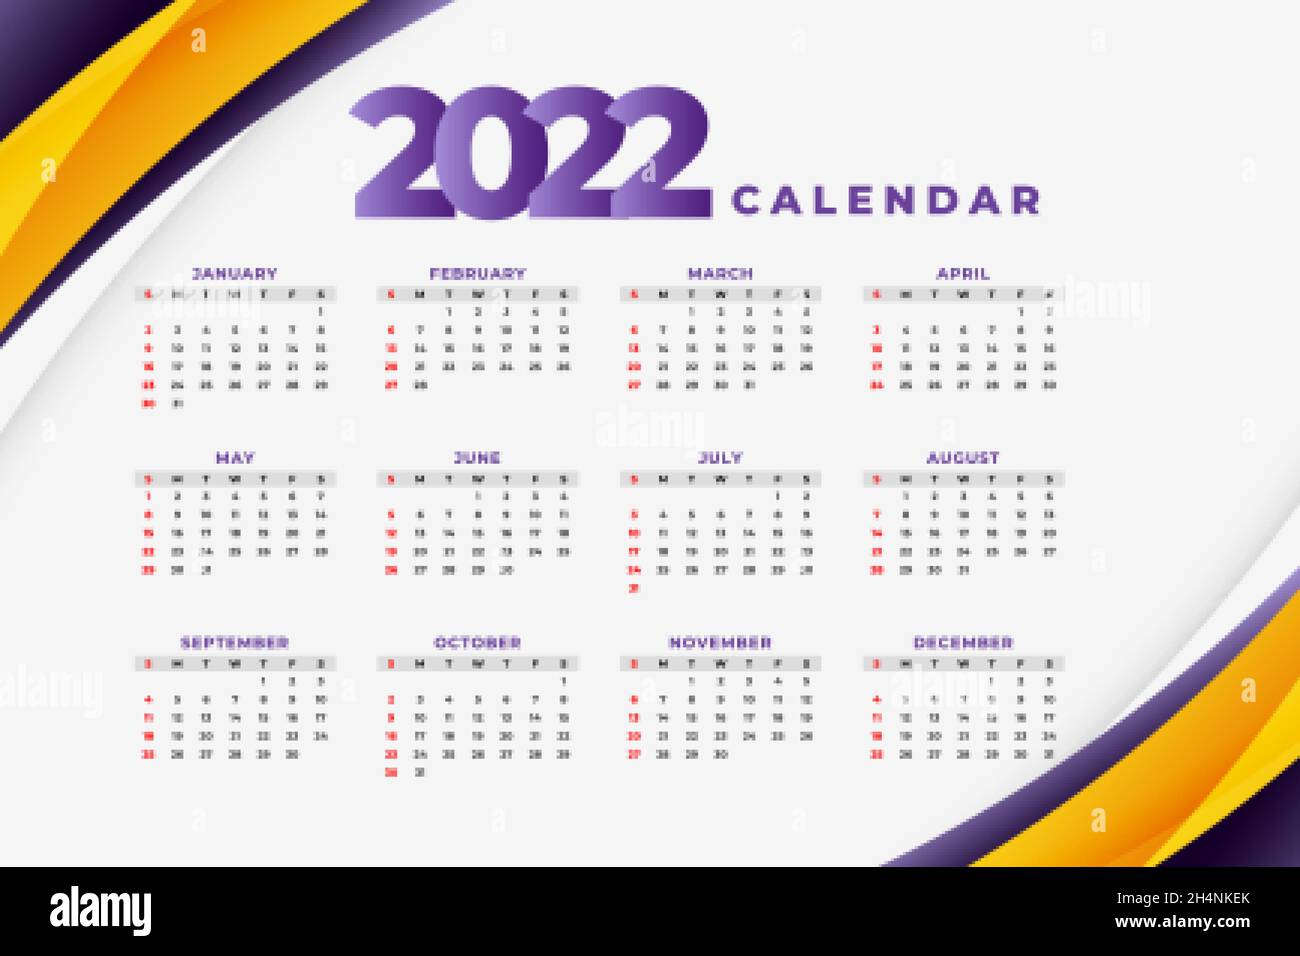 Stylish 2022 Event New Year Calendar Design Template Stock Vector Image & Art - Alamy